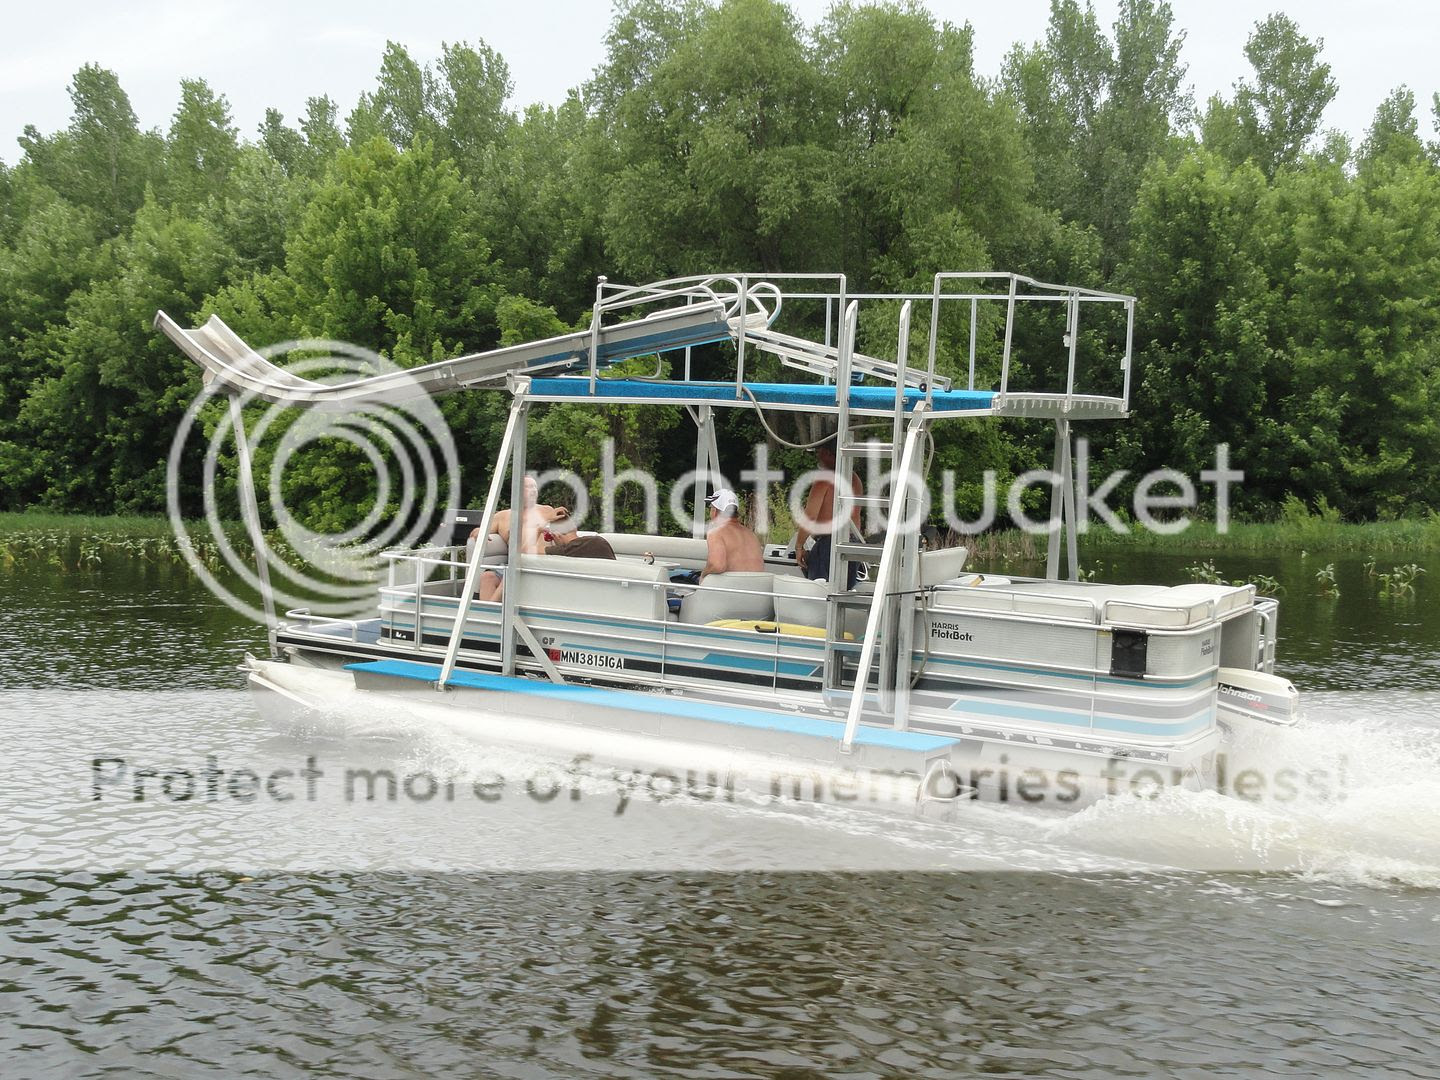 Build Boat: Tell a Build upper deck pontoon boat